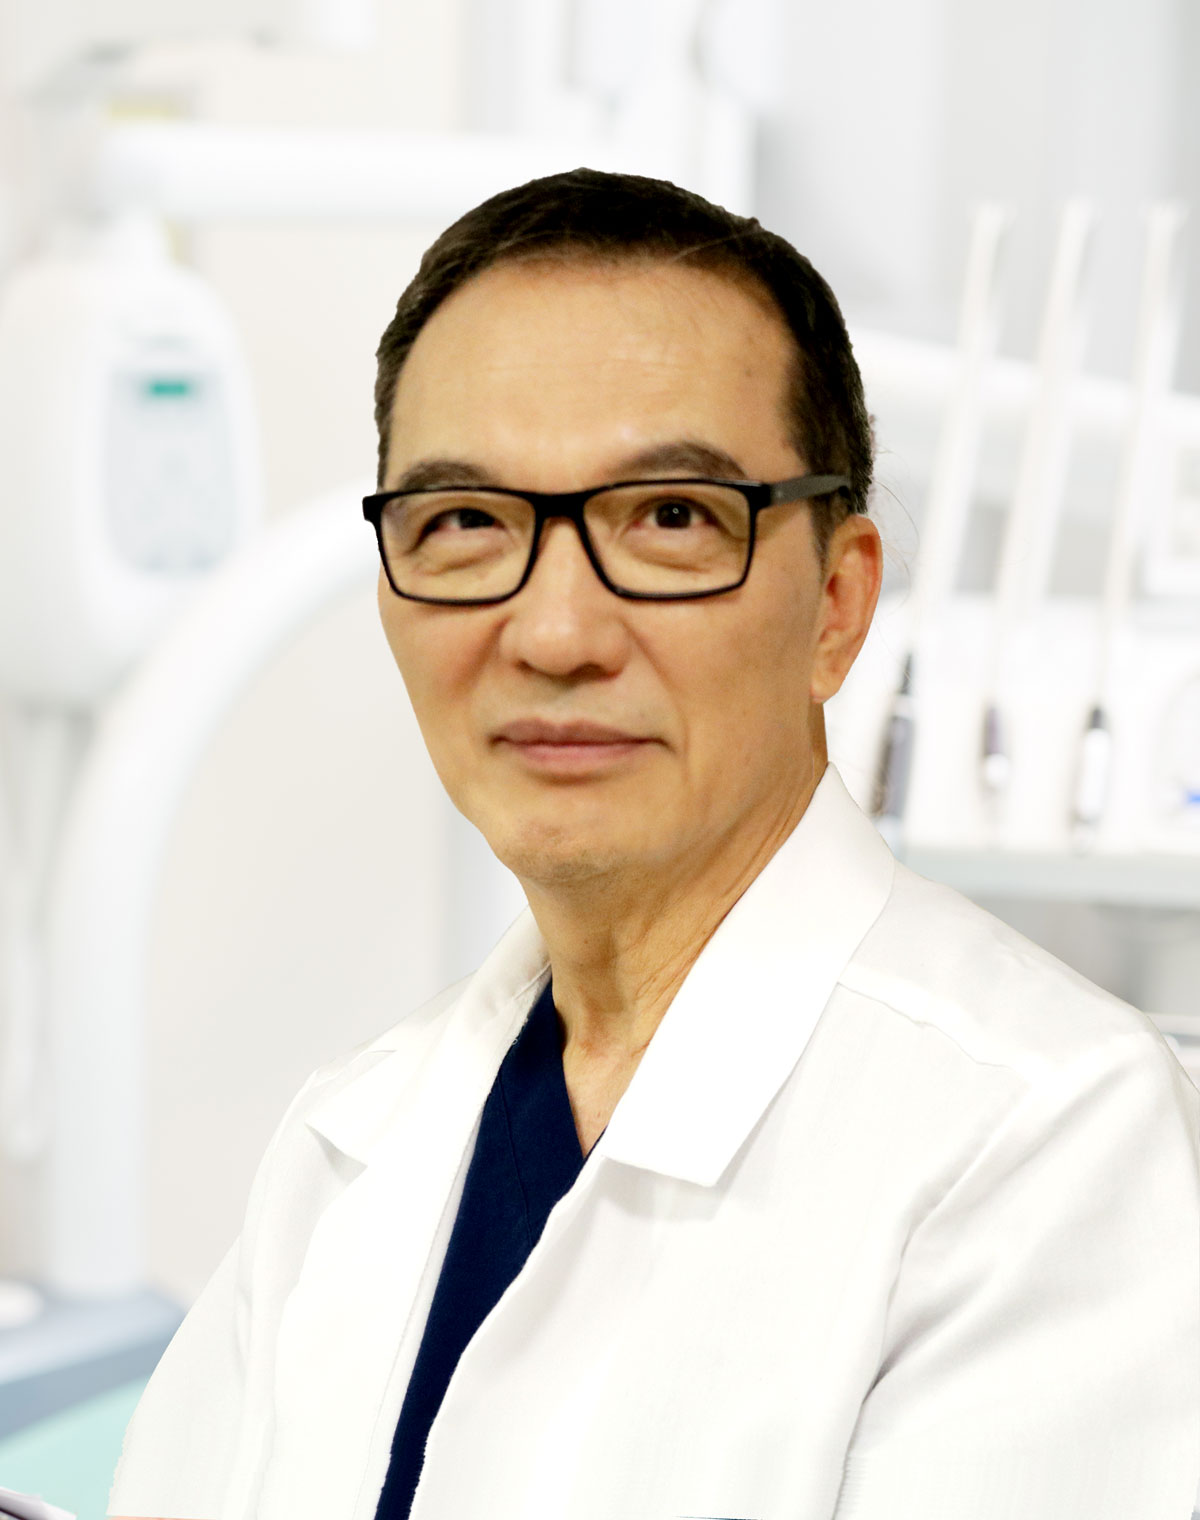 Meet Dr. Lee the Oral & Maxillofacial Surgeon - Alpine Implant Center